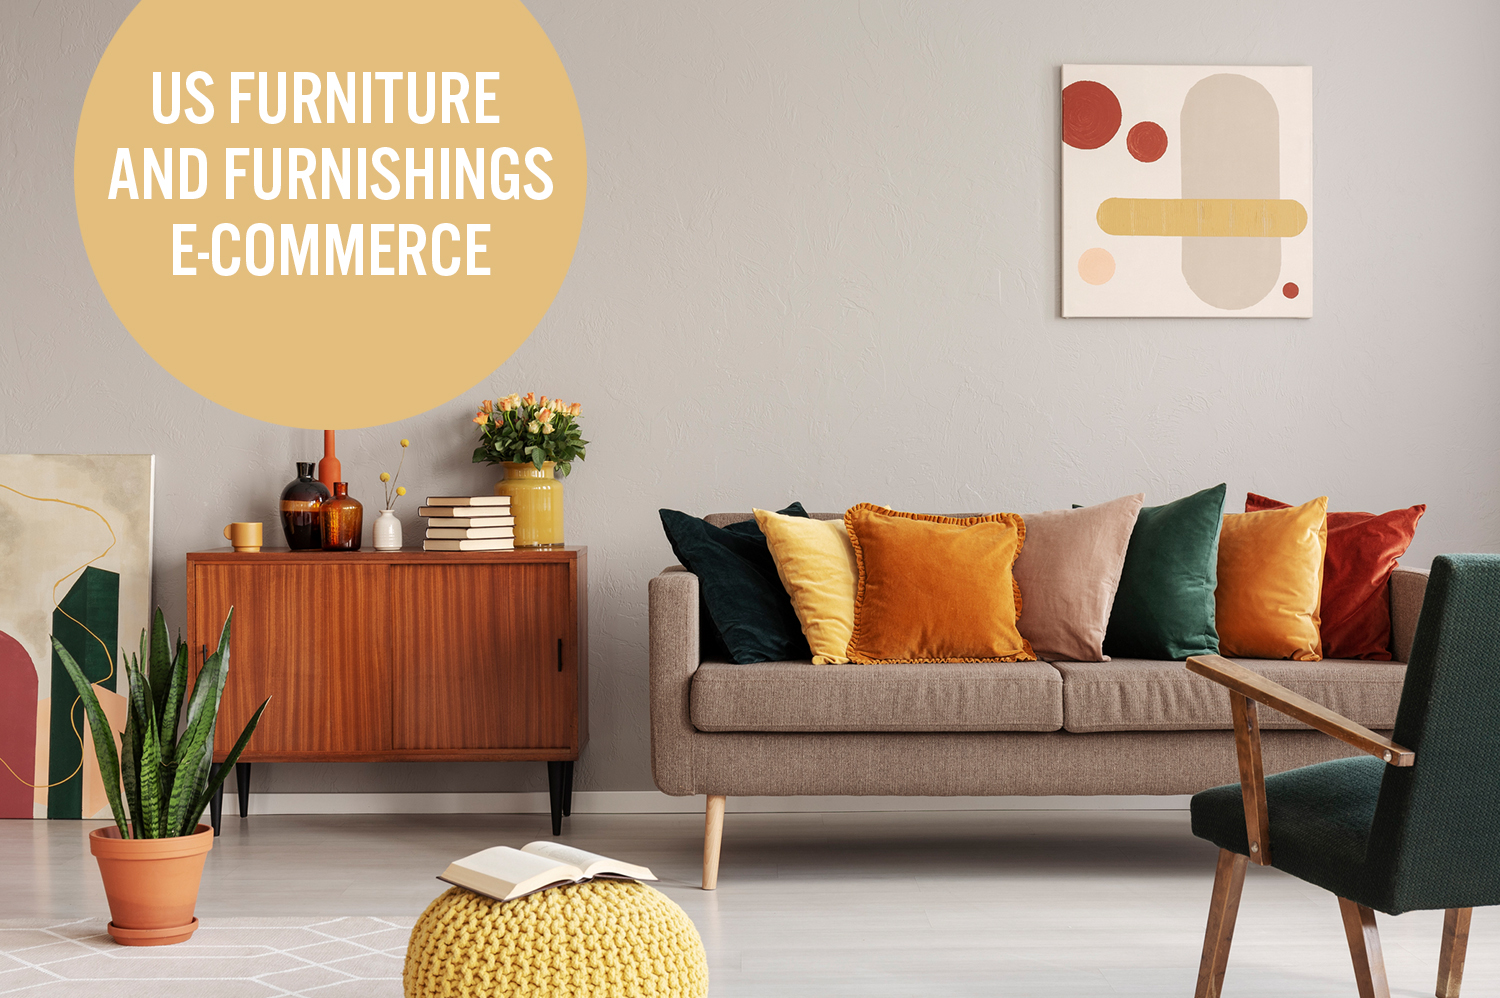 US Furniture and Furnishings E-Commerce